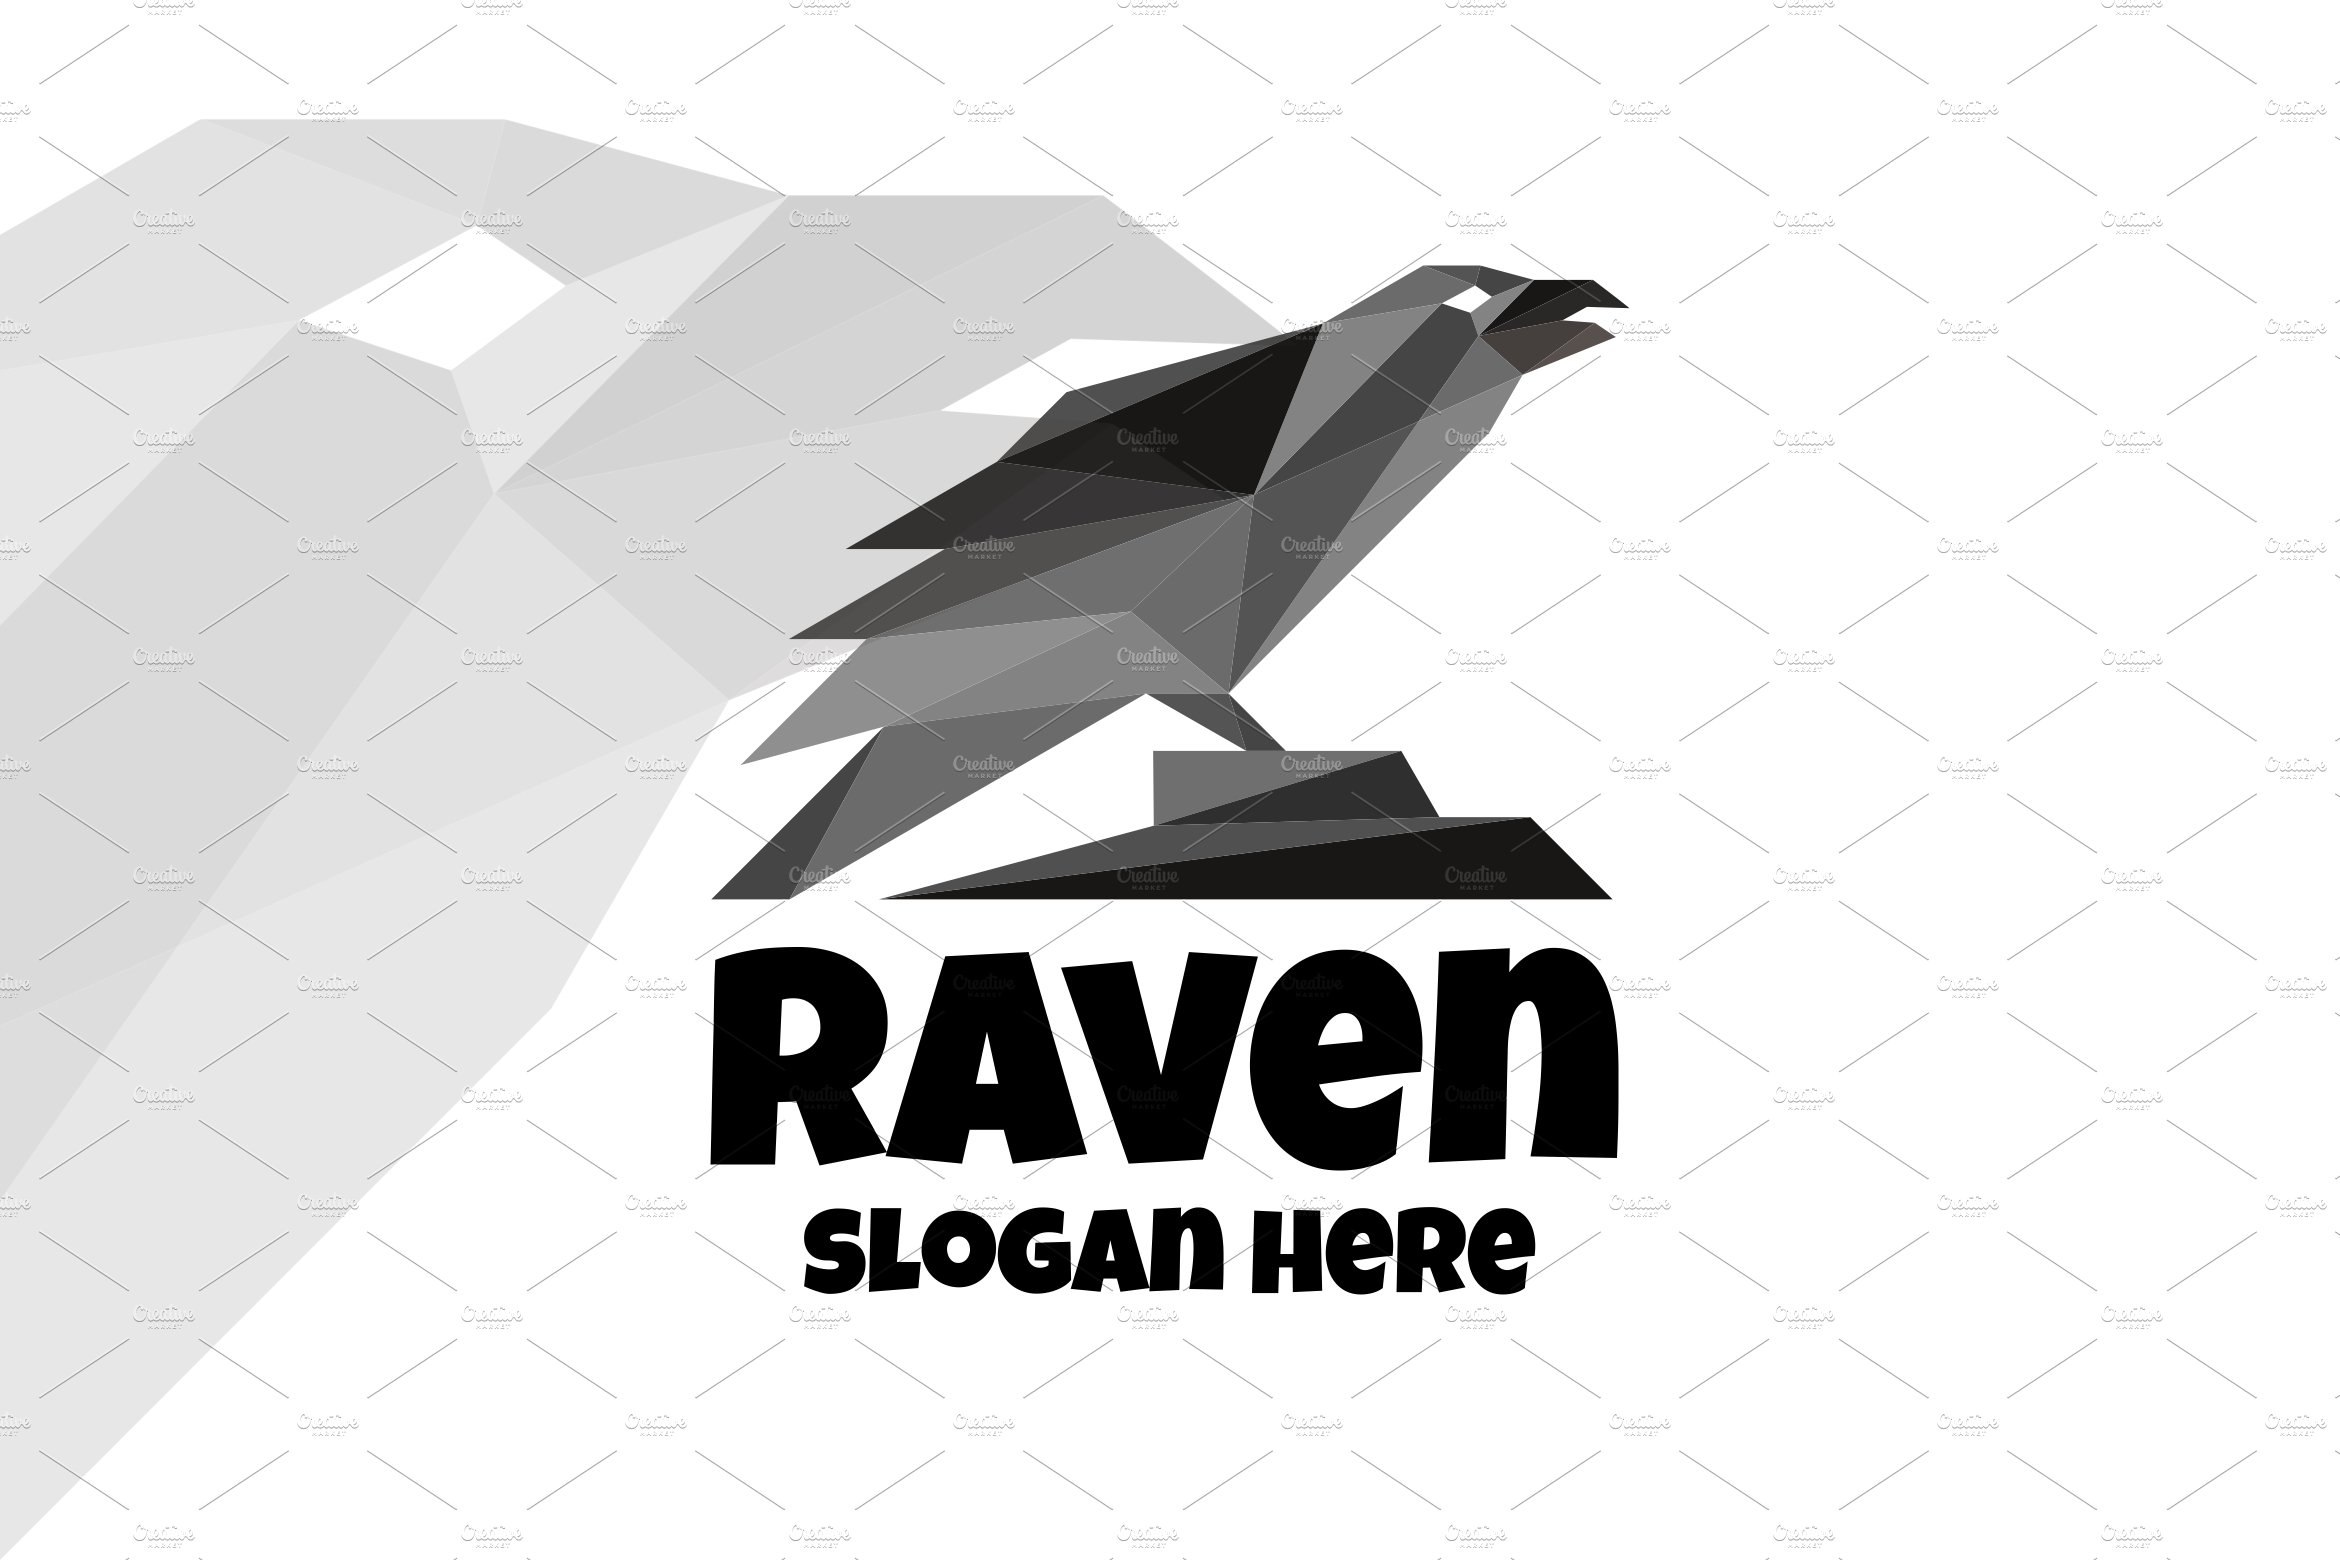 Raven Logo, Geometric Shape Bird cover image.